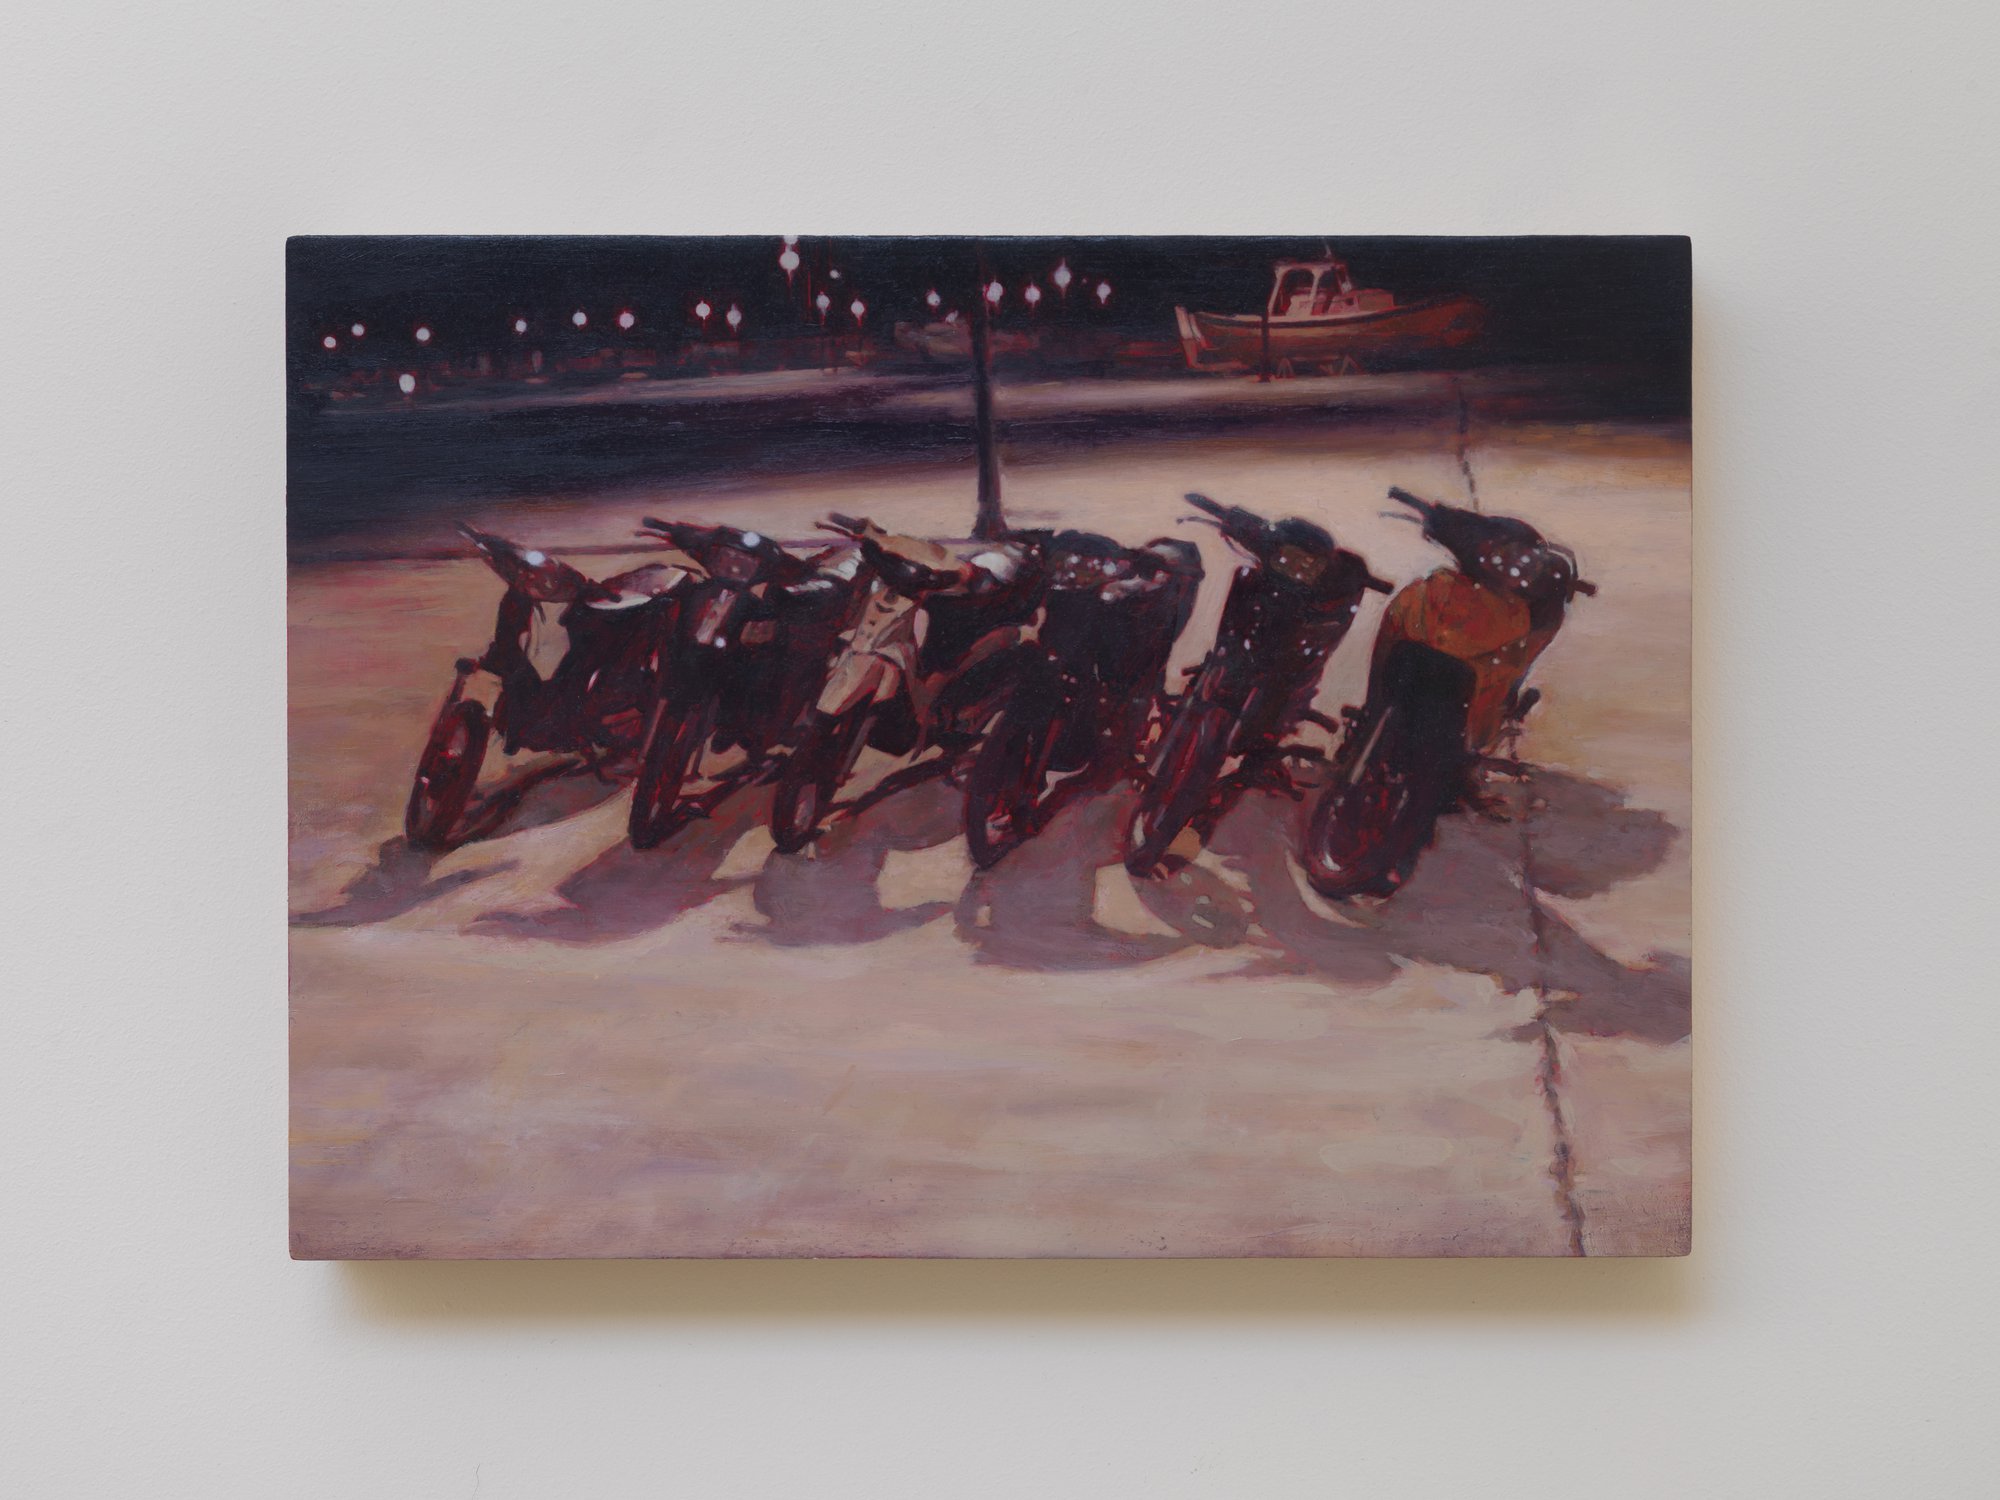 Eftihis Patsourakis, still 0, oil on wood, 29.5 x 23 cm, 2019